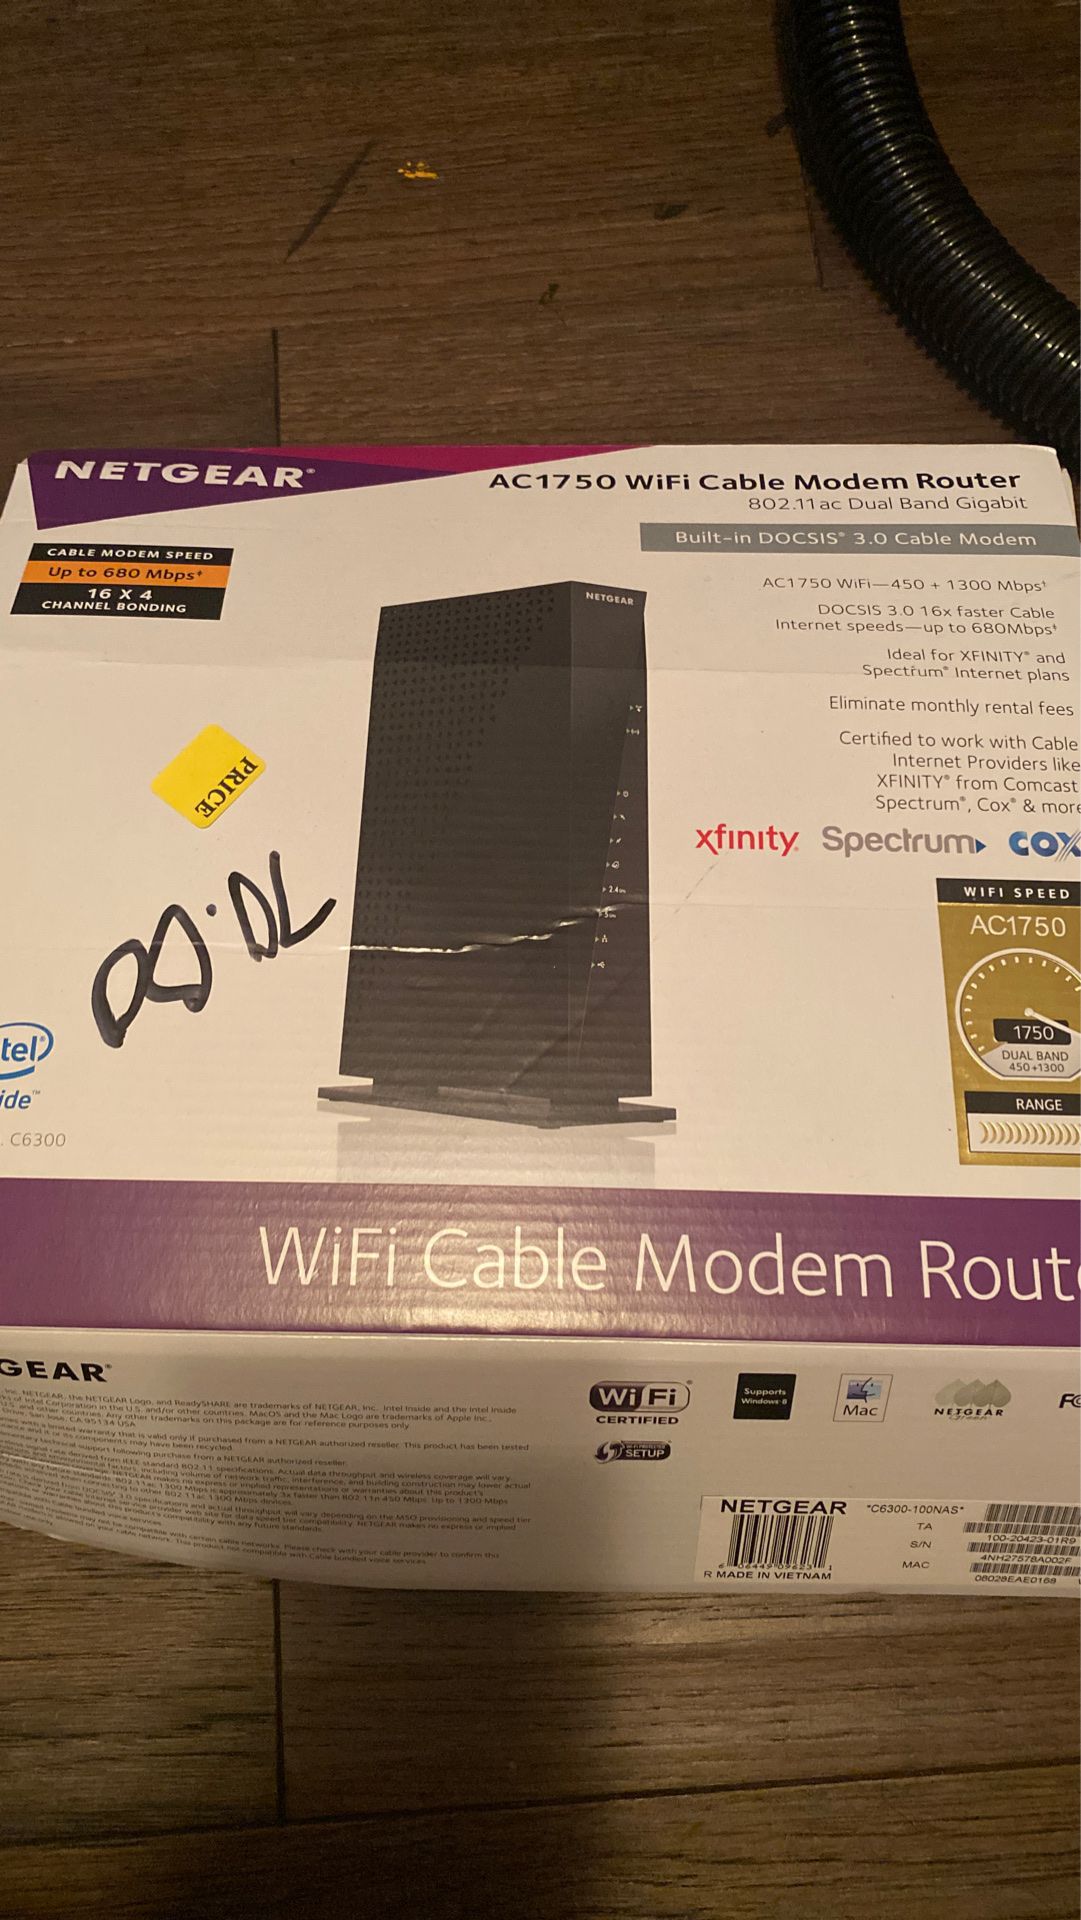 Netgear Ac1750 WiFi Cable Modem Router